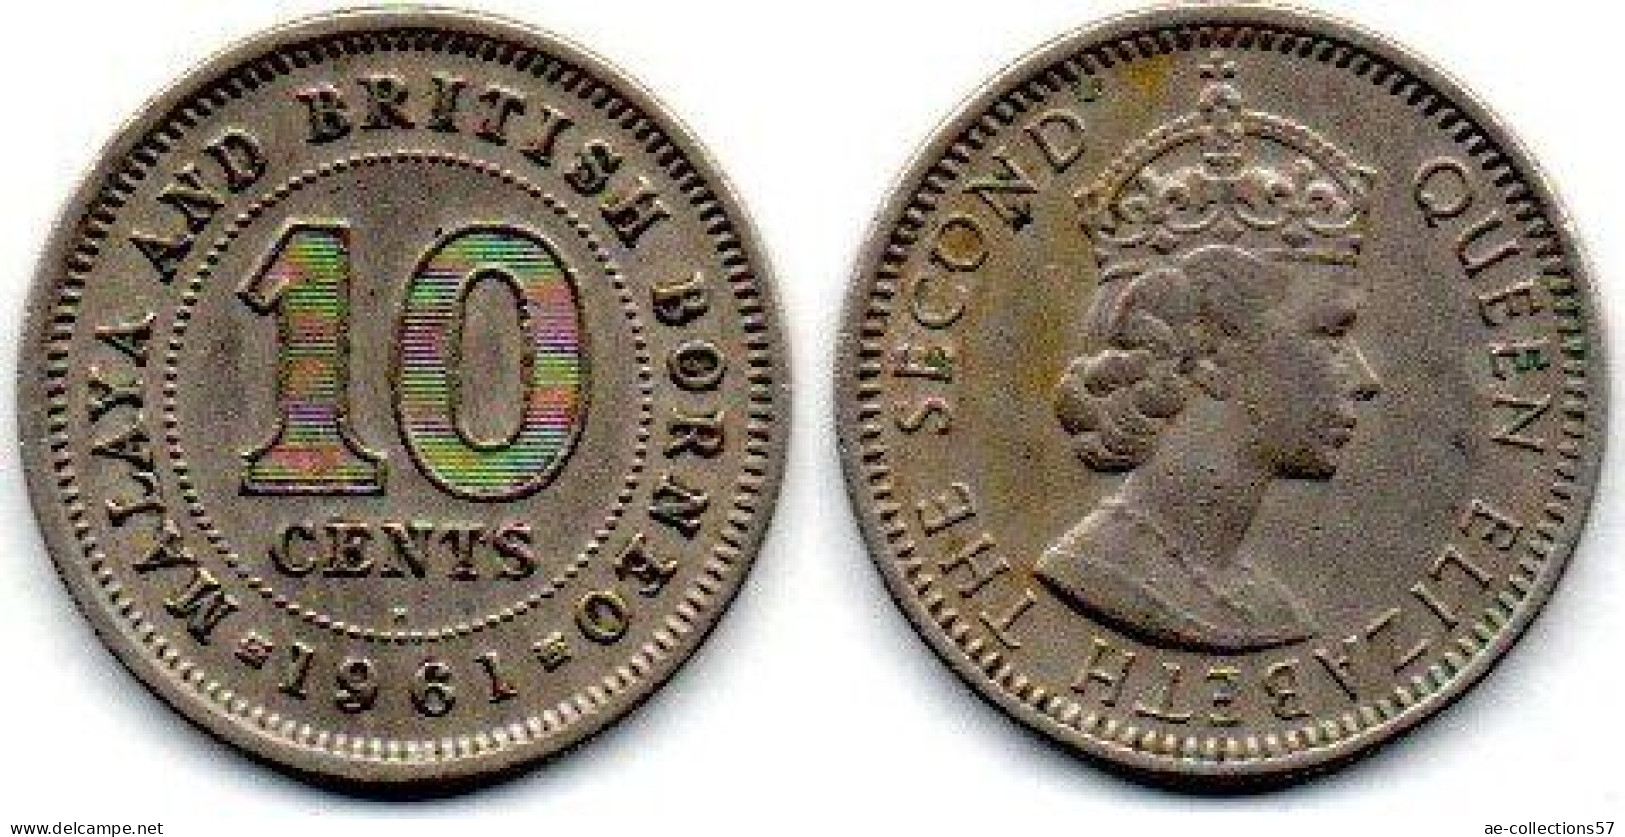 MA 25263 / Malaya 10 Cents 1961 H TTB - Malaysie